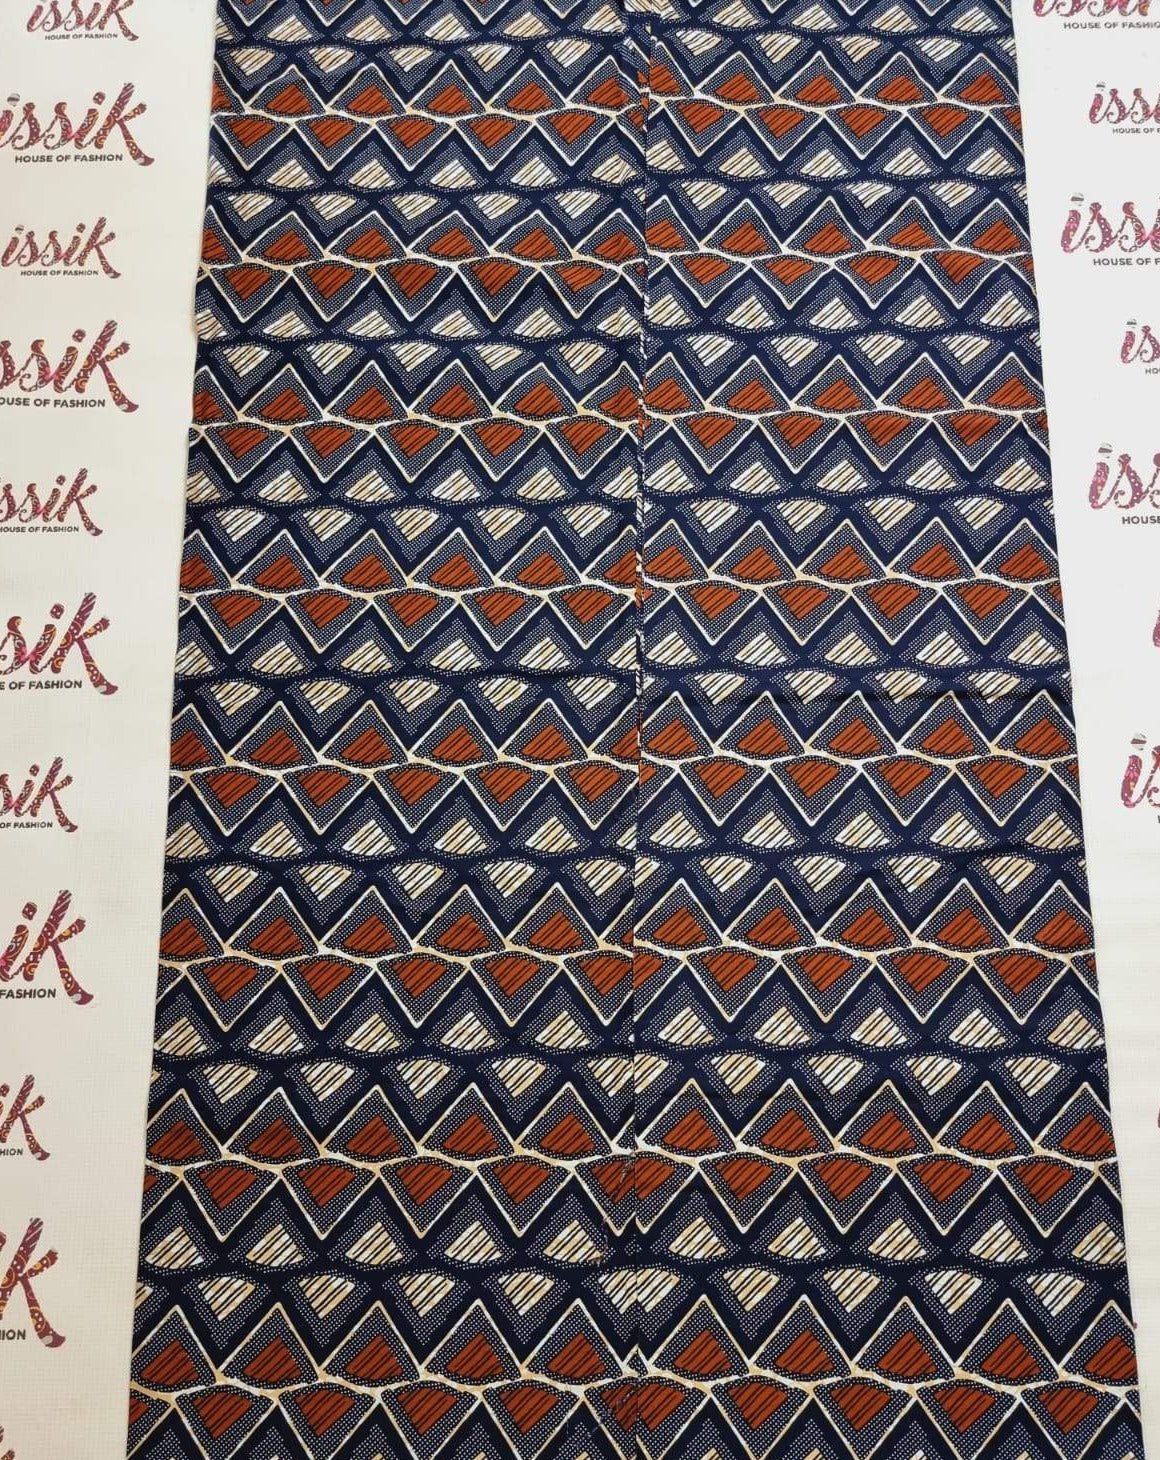 Blue & Brown Ankara Fabric - ak40189 - House of Prints